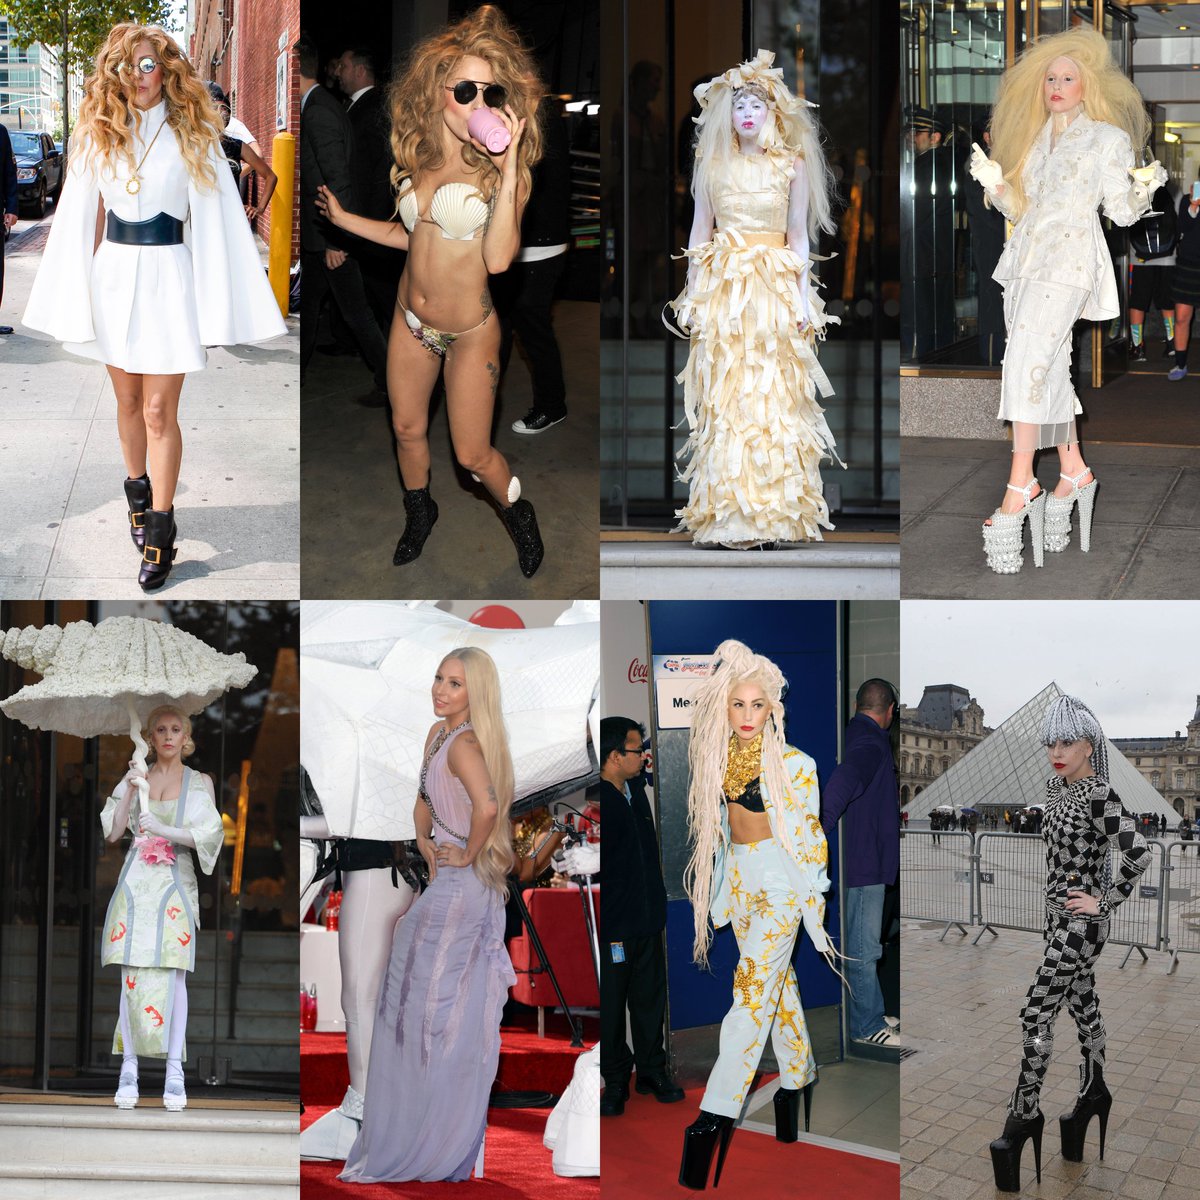 Леди гага элтон. Леди Гага Эра артпоп. Леди Гага артпоп Наряды. Элтон Джон и леди Гага. Гага Элтон Джон артпоп.